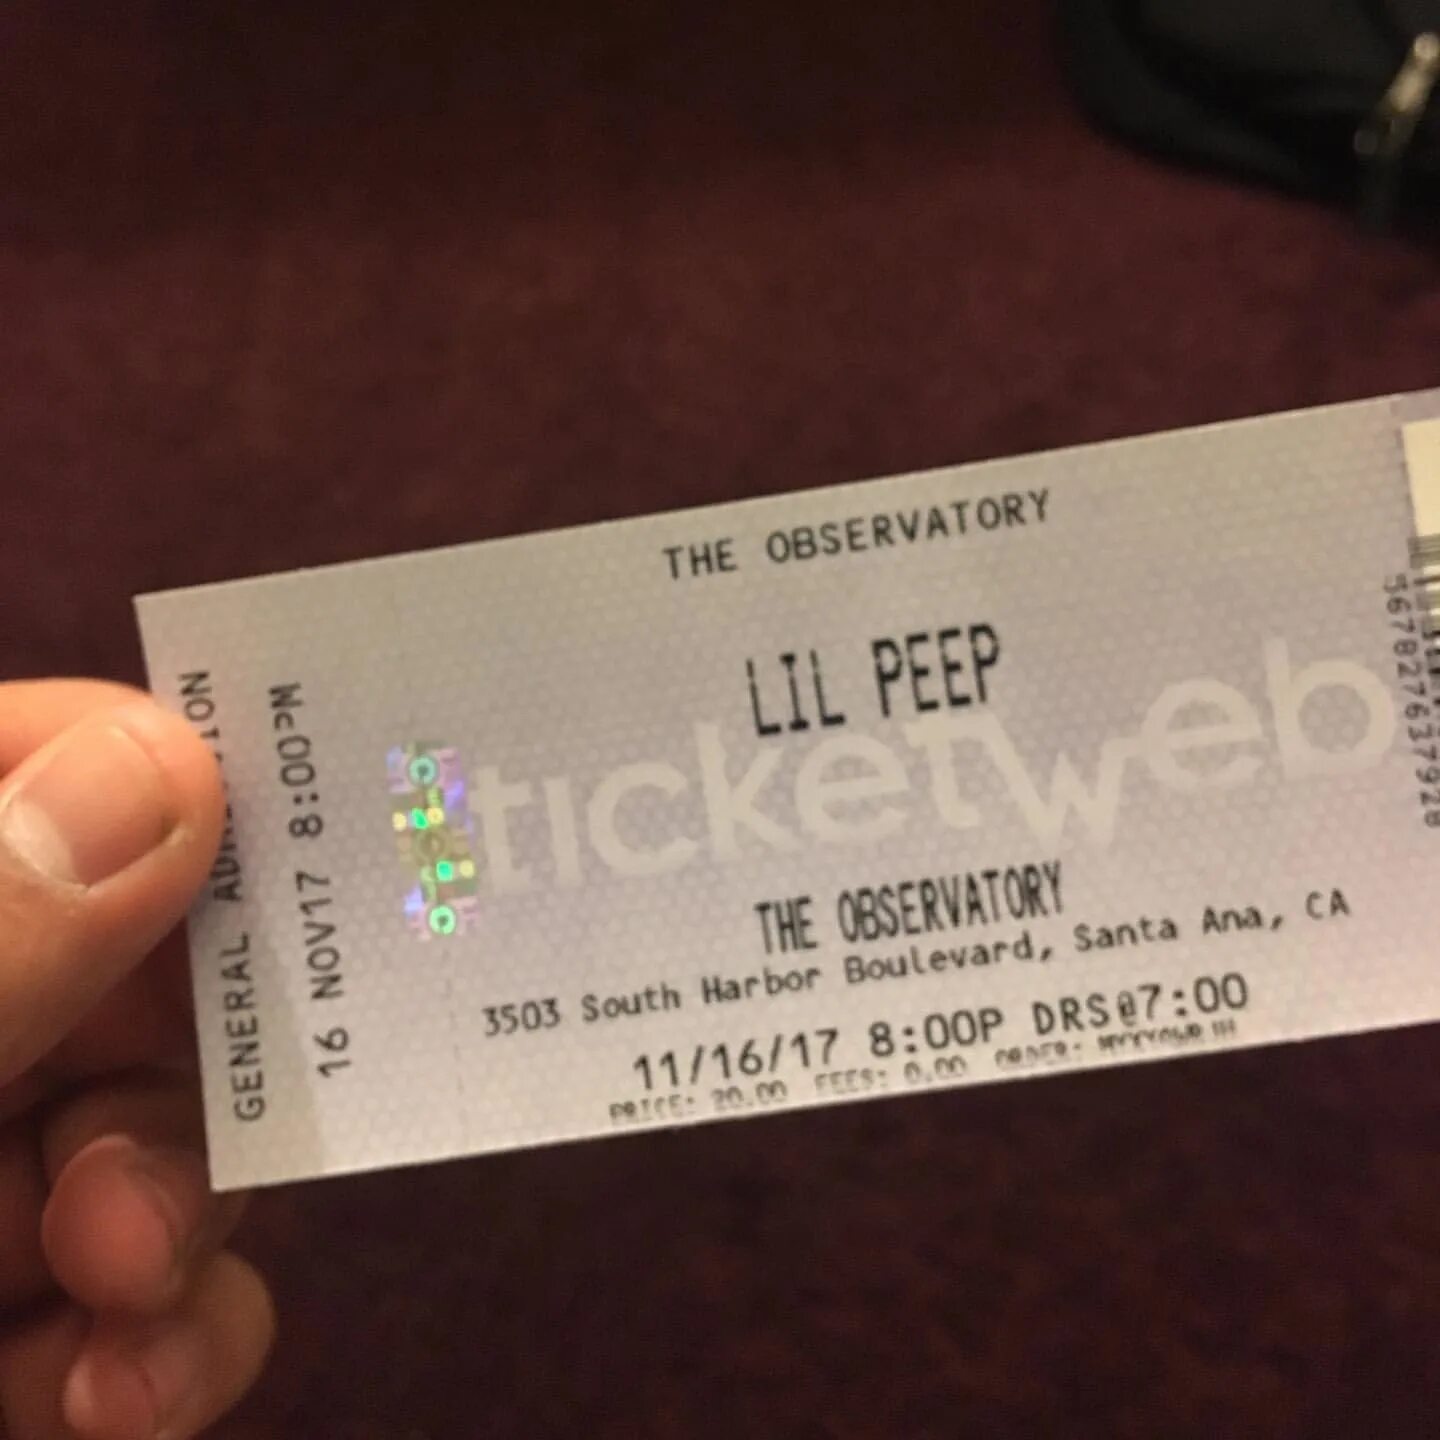 Билет на концерт лил Пипа. Билет на концерт лил ПИПП. Билет на концерт Lil Peep. Чек билета на концерт.